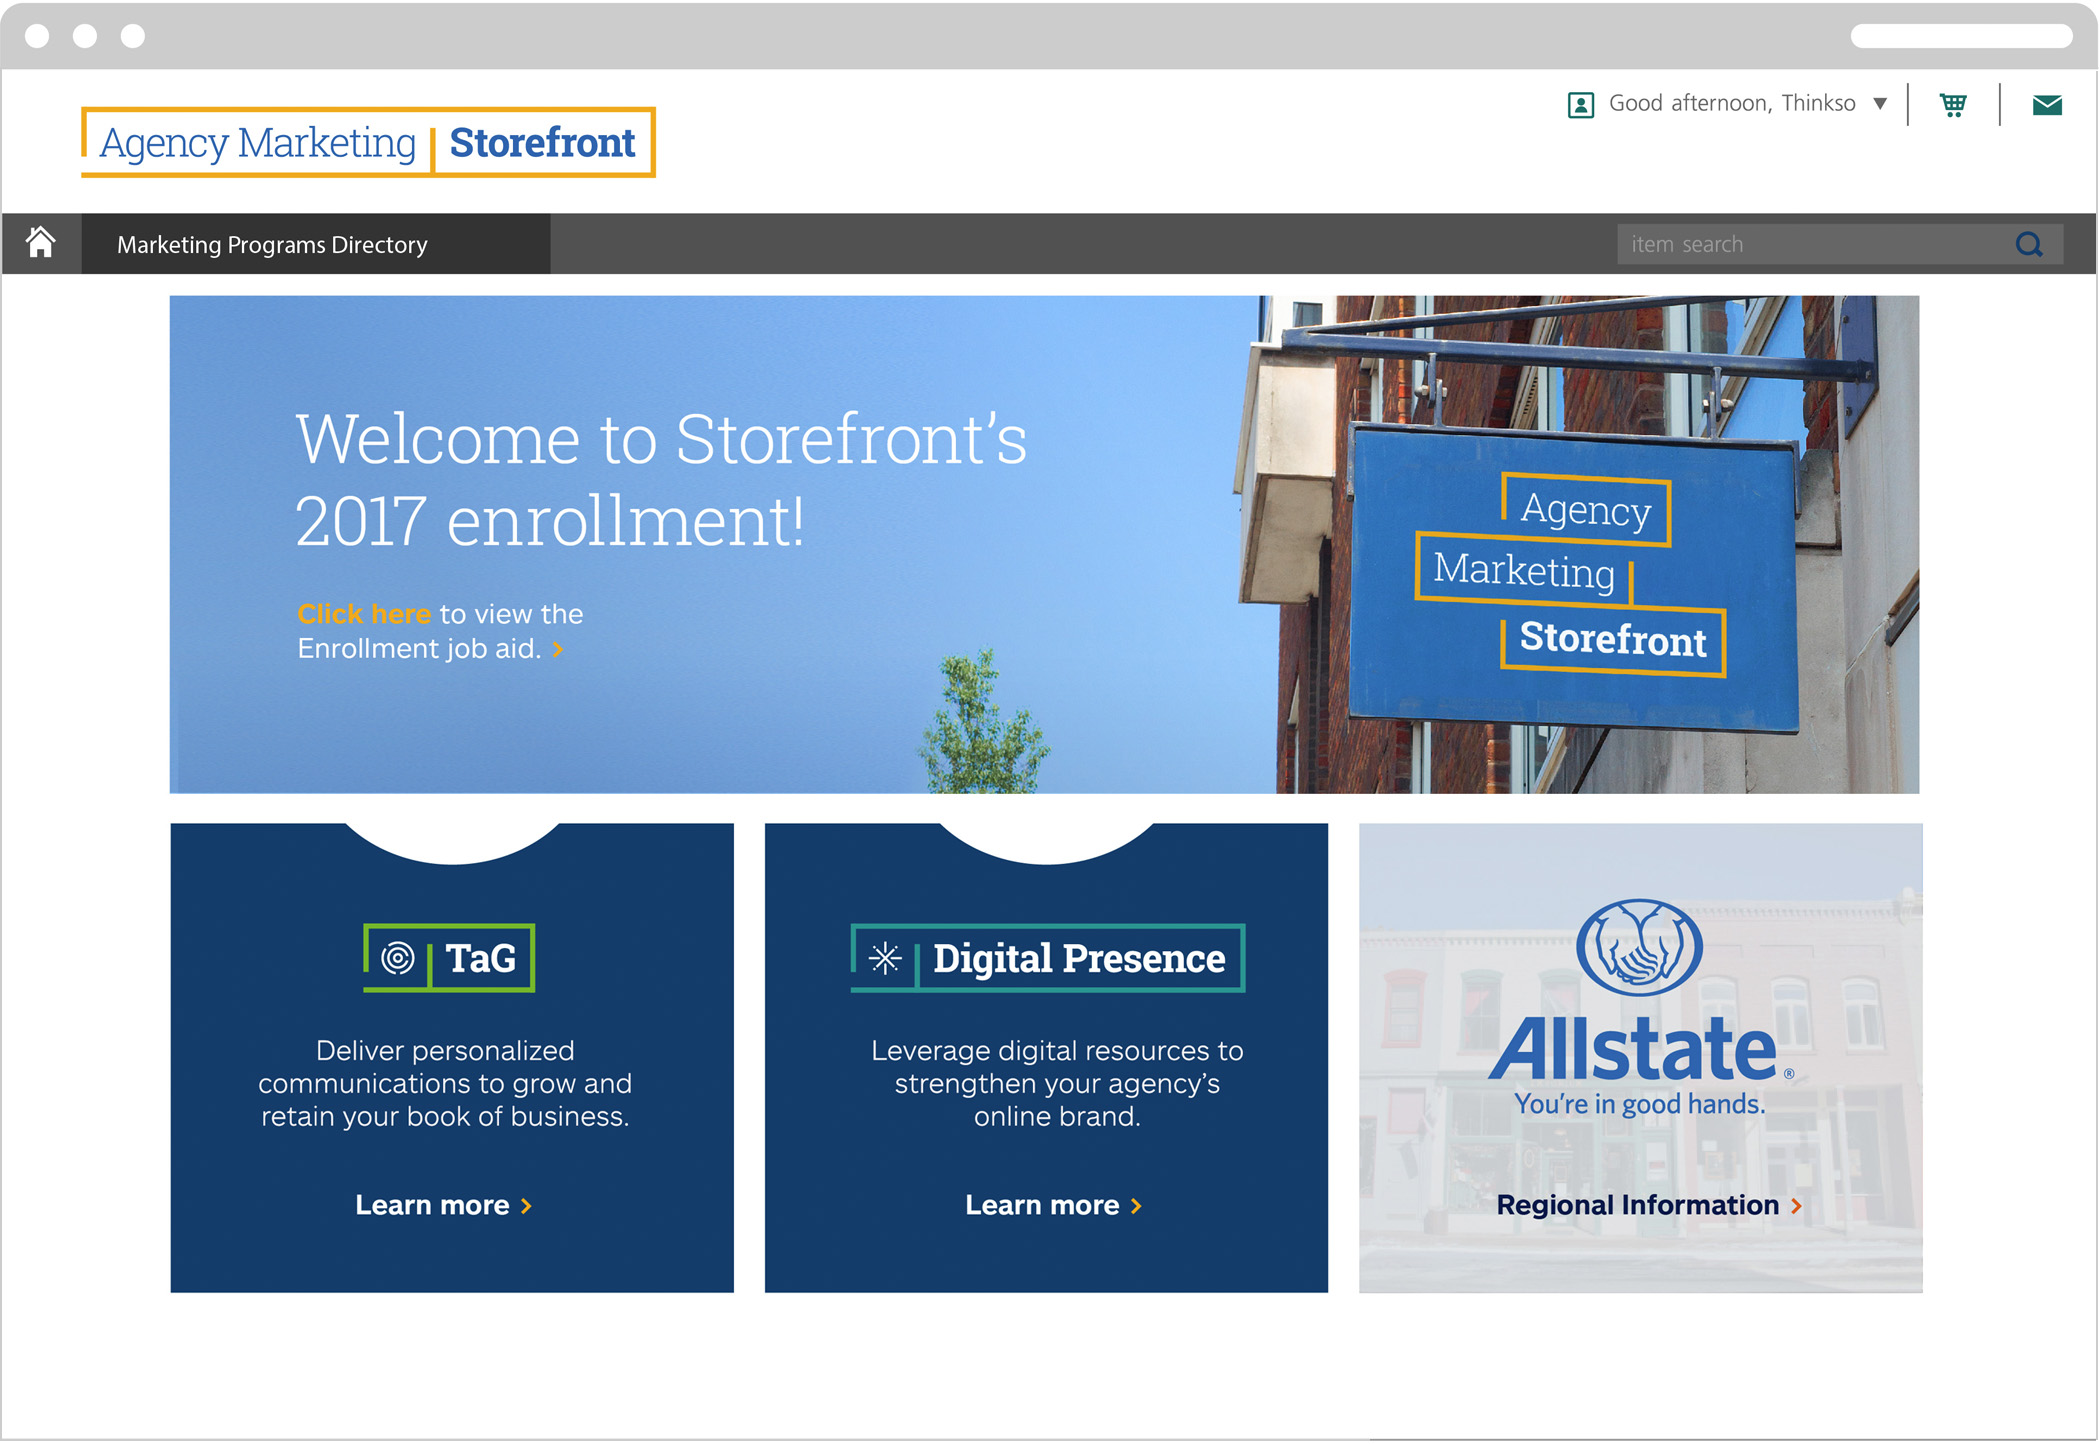 Allstate Agency Marketing Storefront enrollment web page.